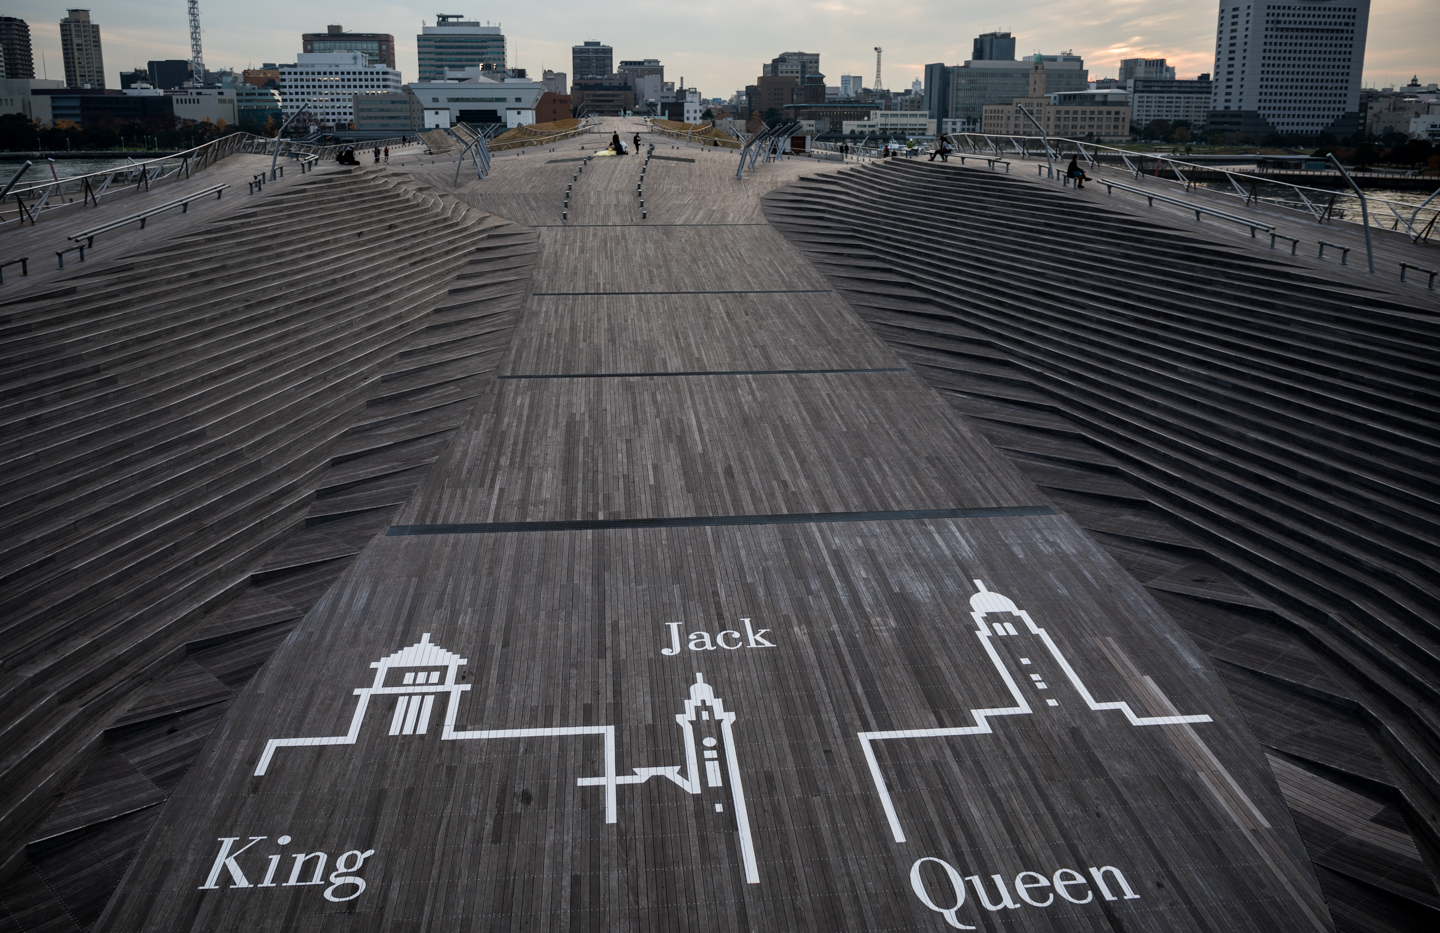 Yokohama Bay Area: King, Jack, Queen Illustration